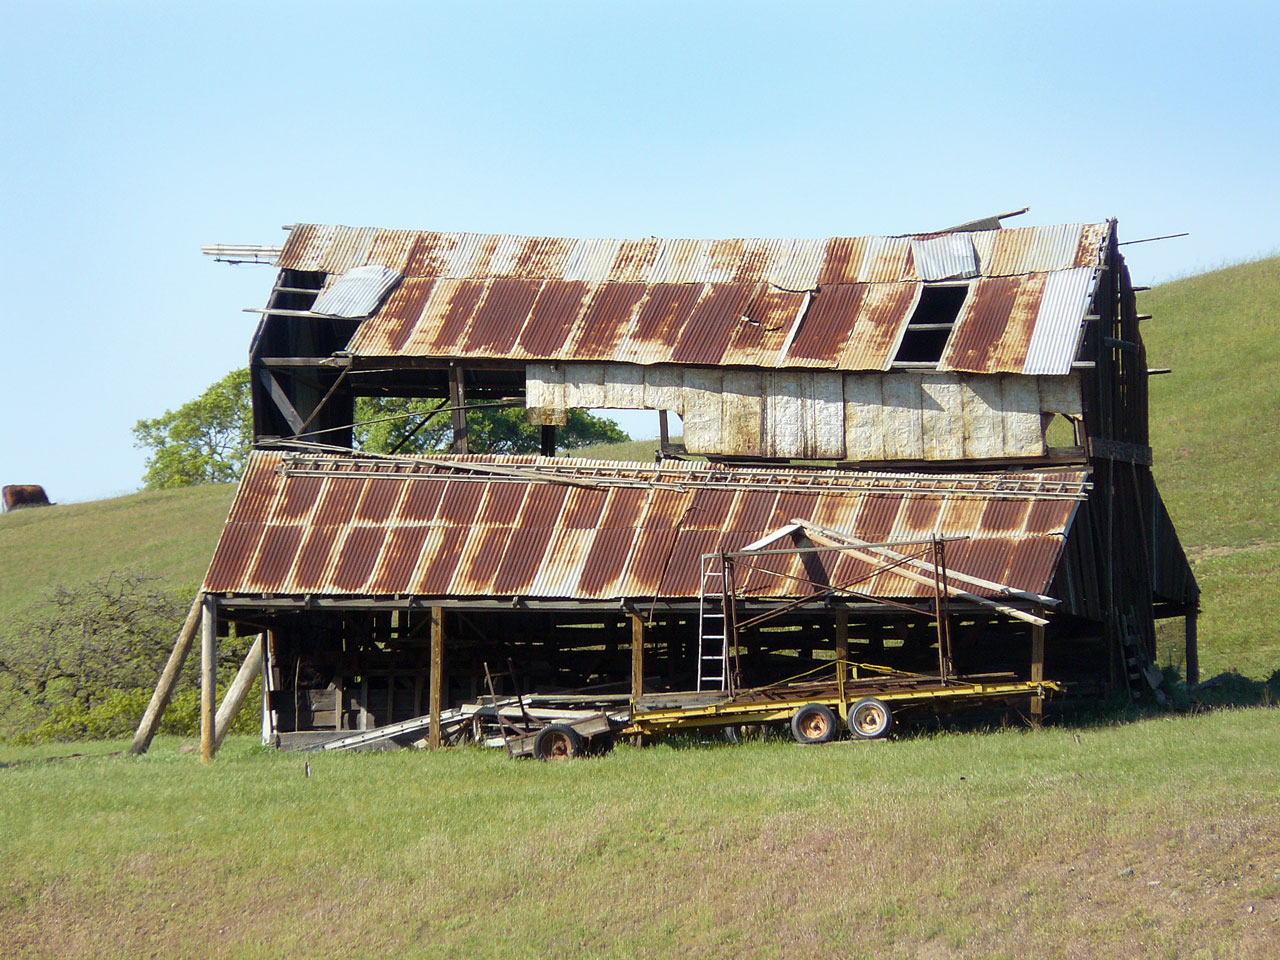 Rustic Barn